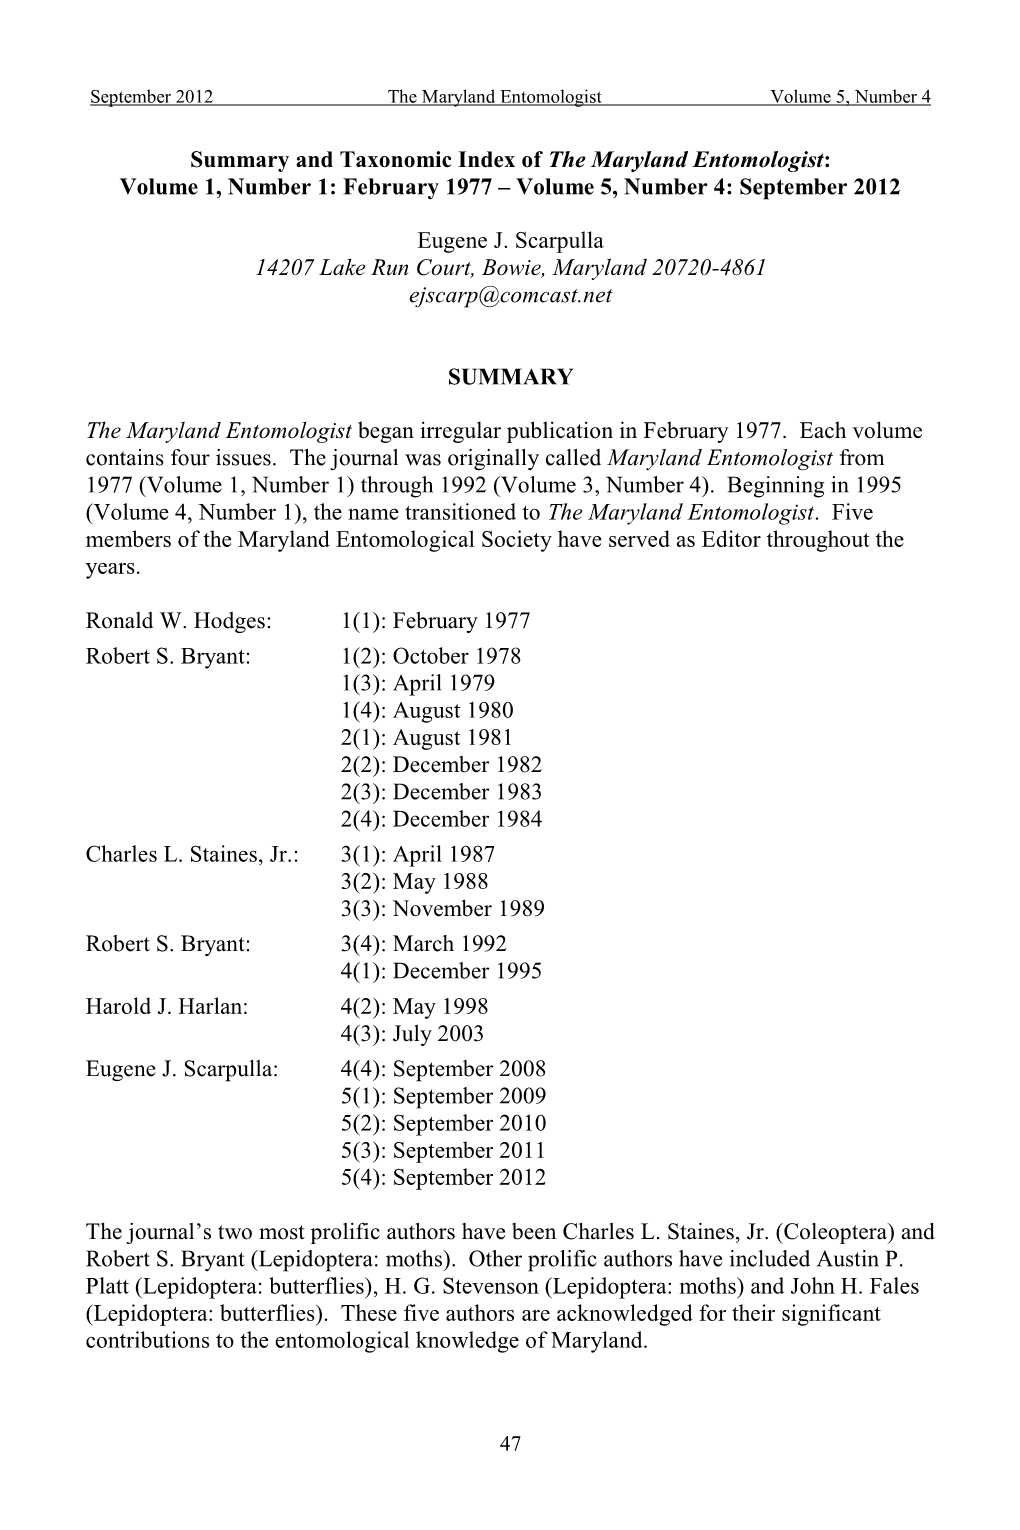 Taxonomic Index of the Maryland Entomologist, 1977 to 2012